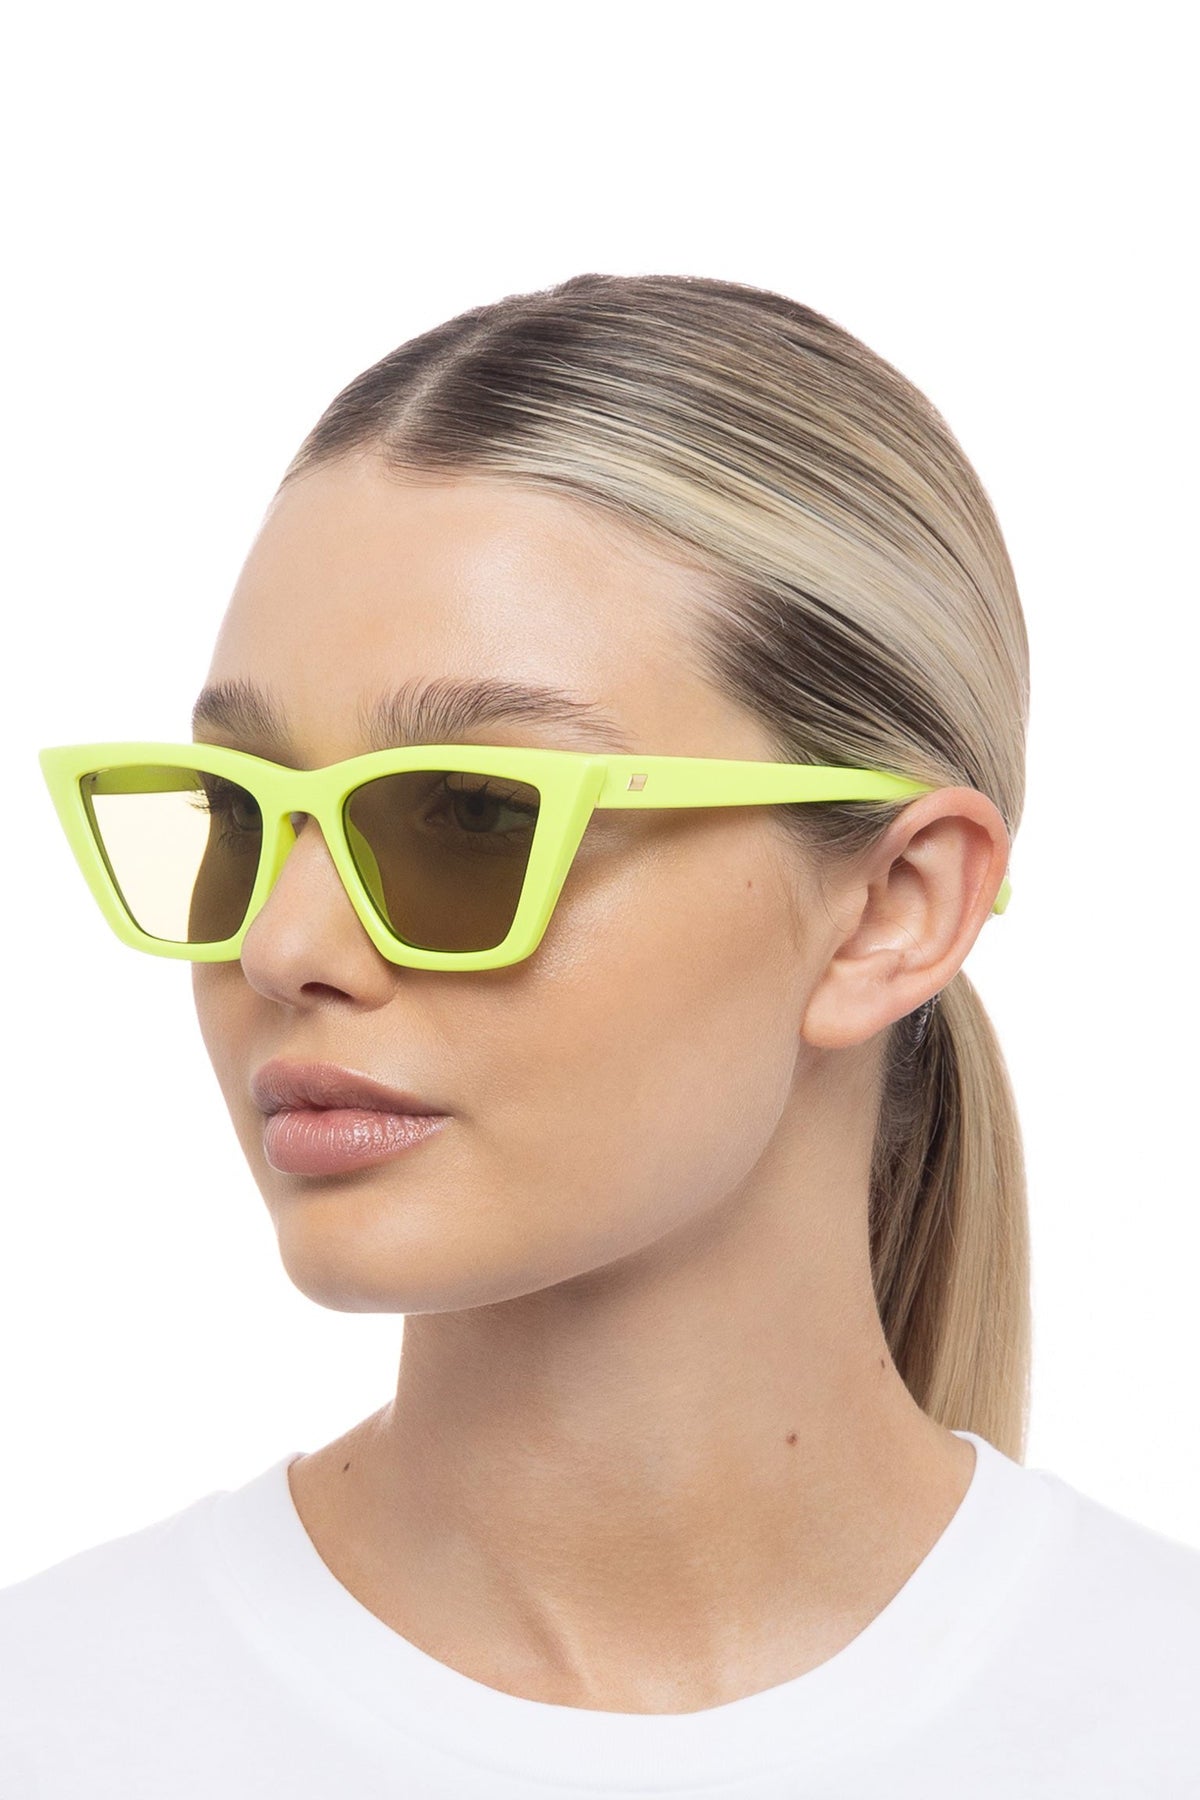 Velodrome Sunglasses - Pine Lime // LTD ED